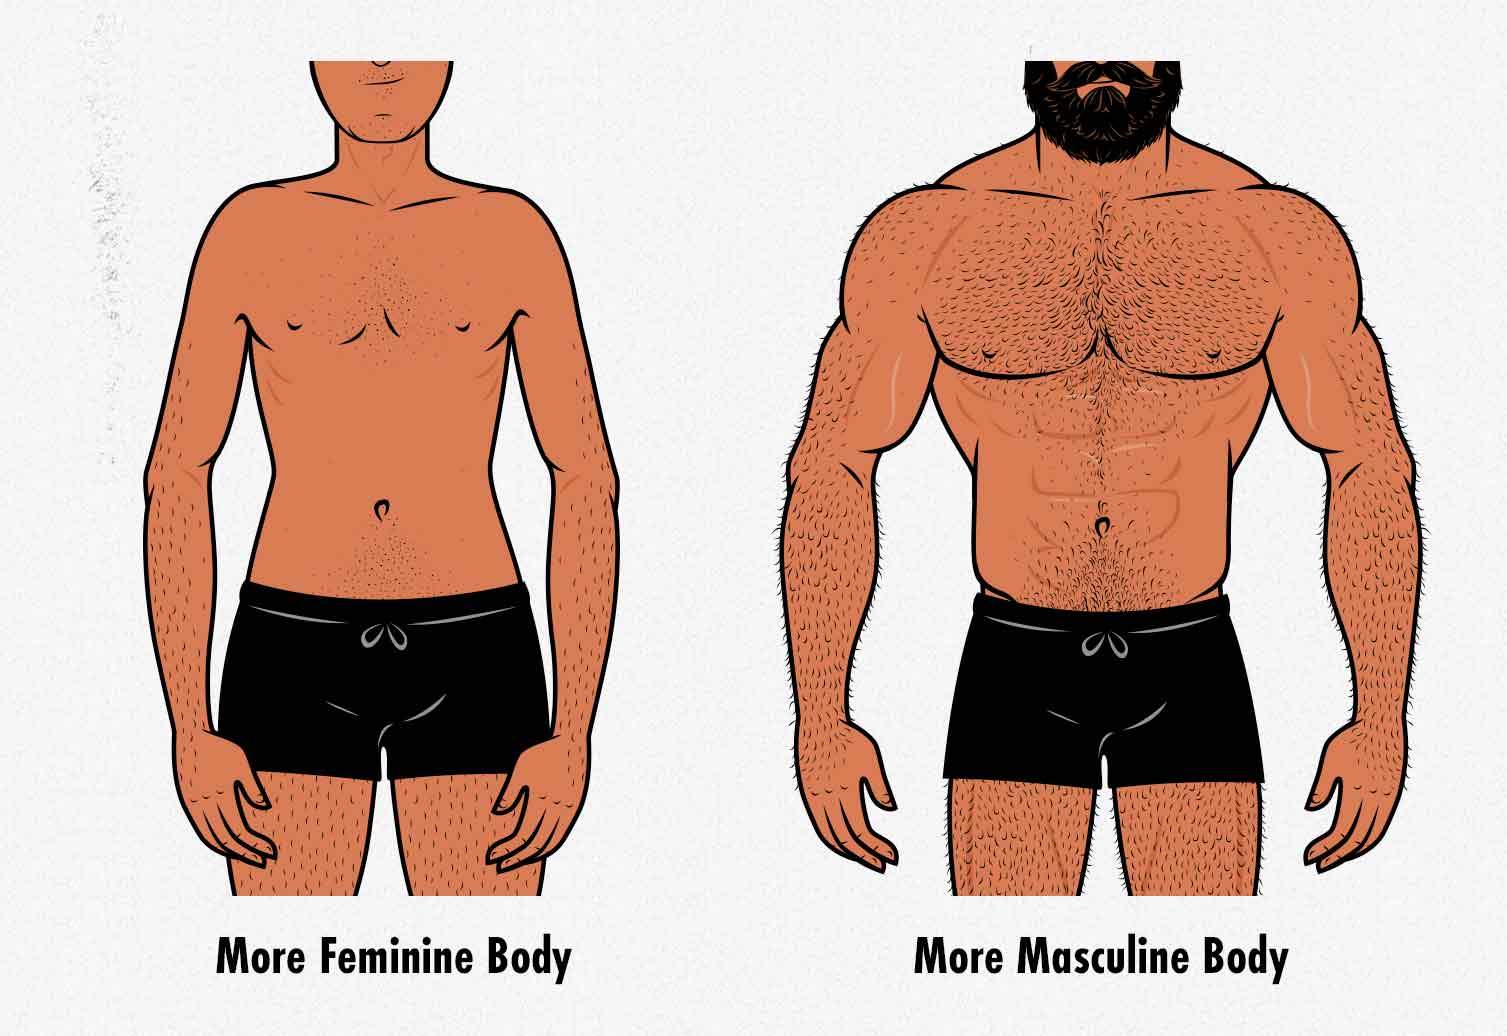 Illustration comparing masculine and feminine body shapes.